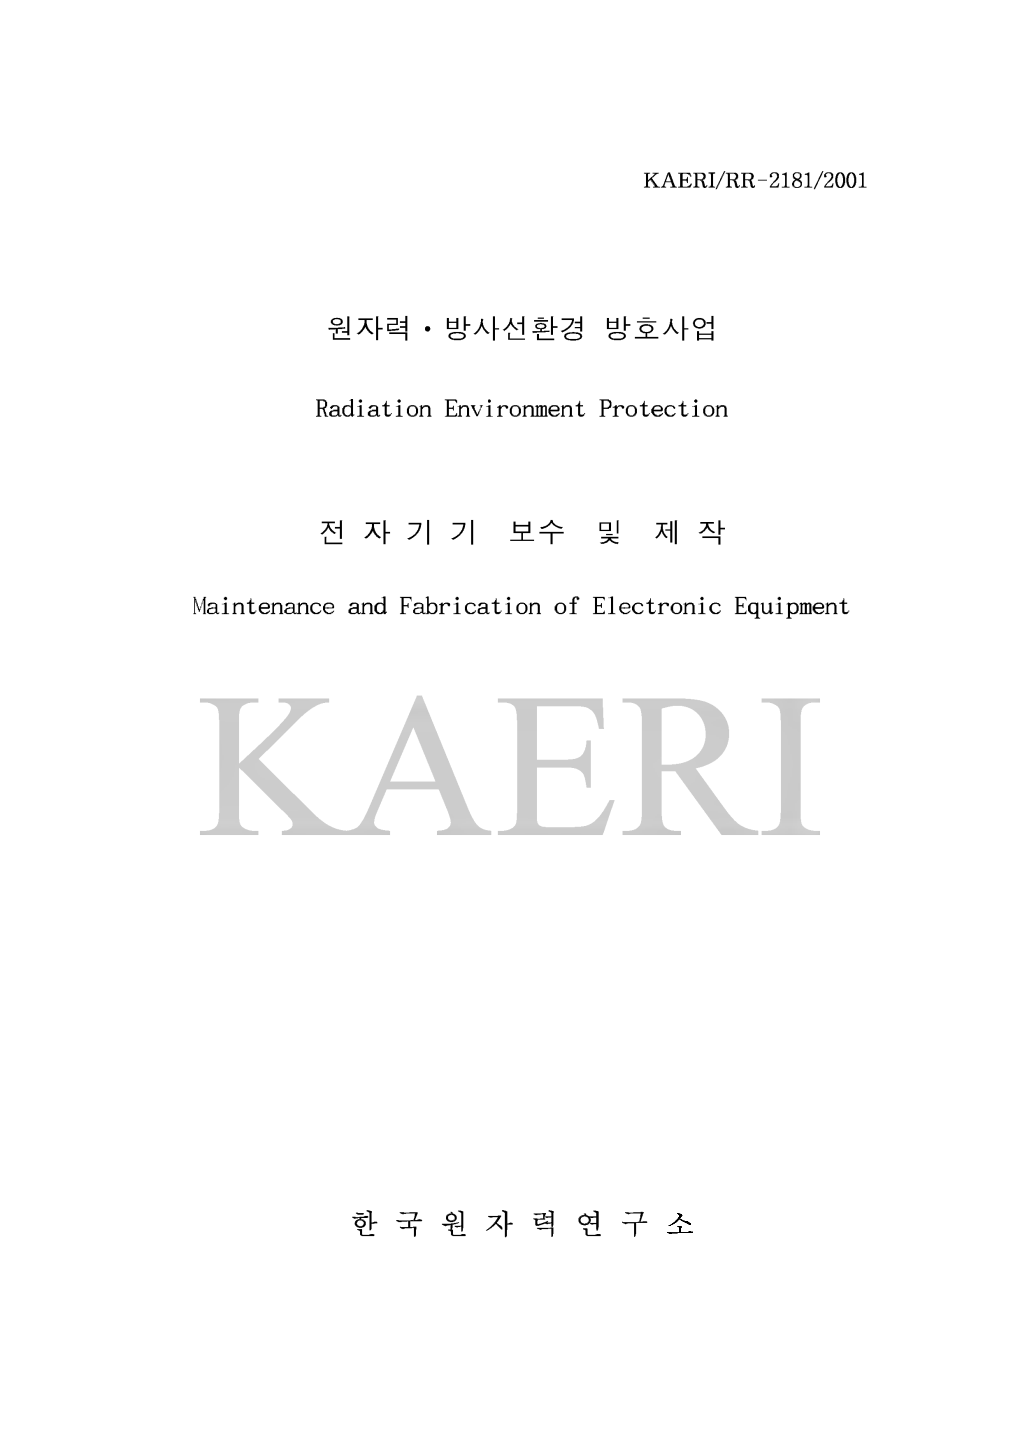 Maintenance and Fabrication of Electronic Equipment KAERT